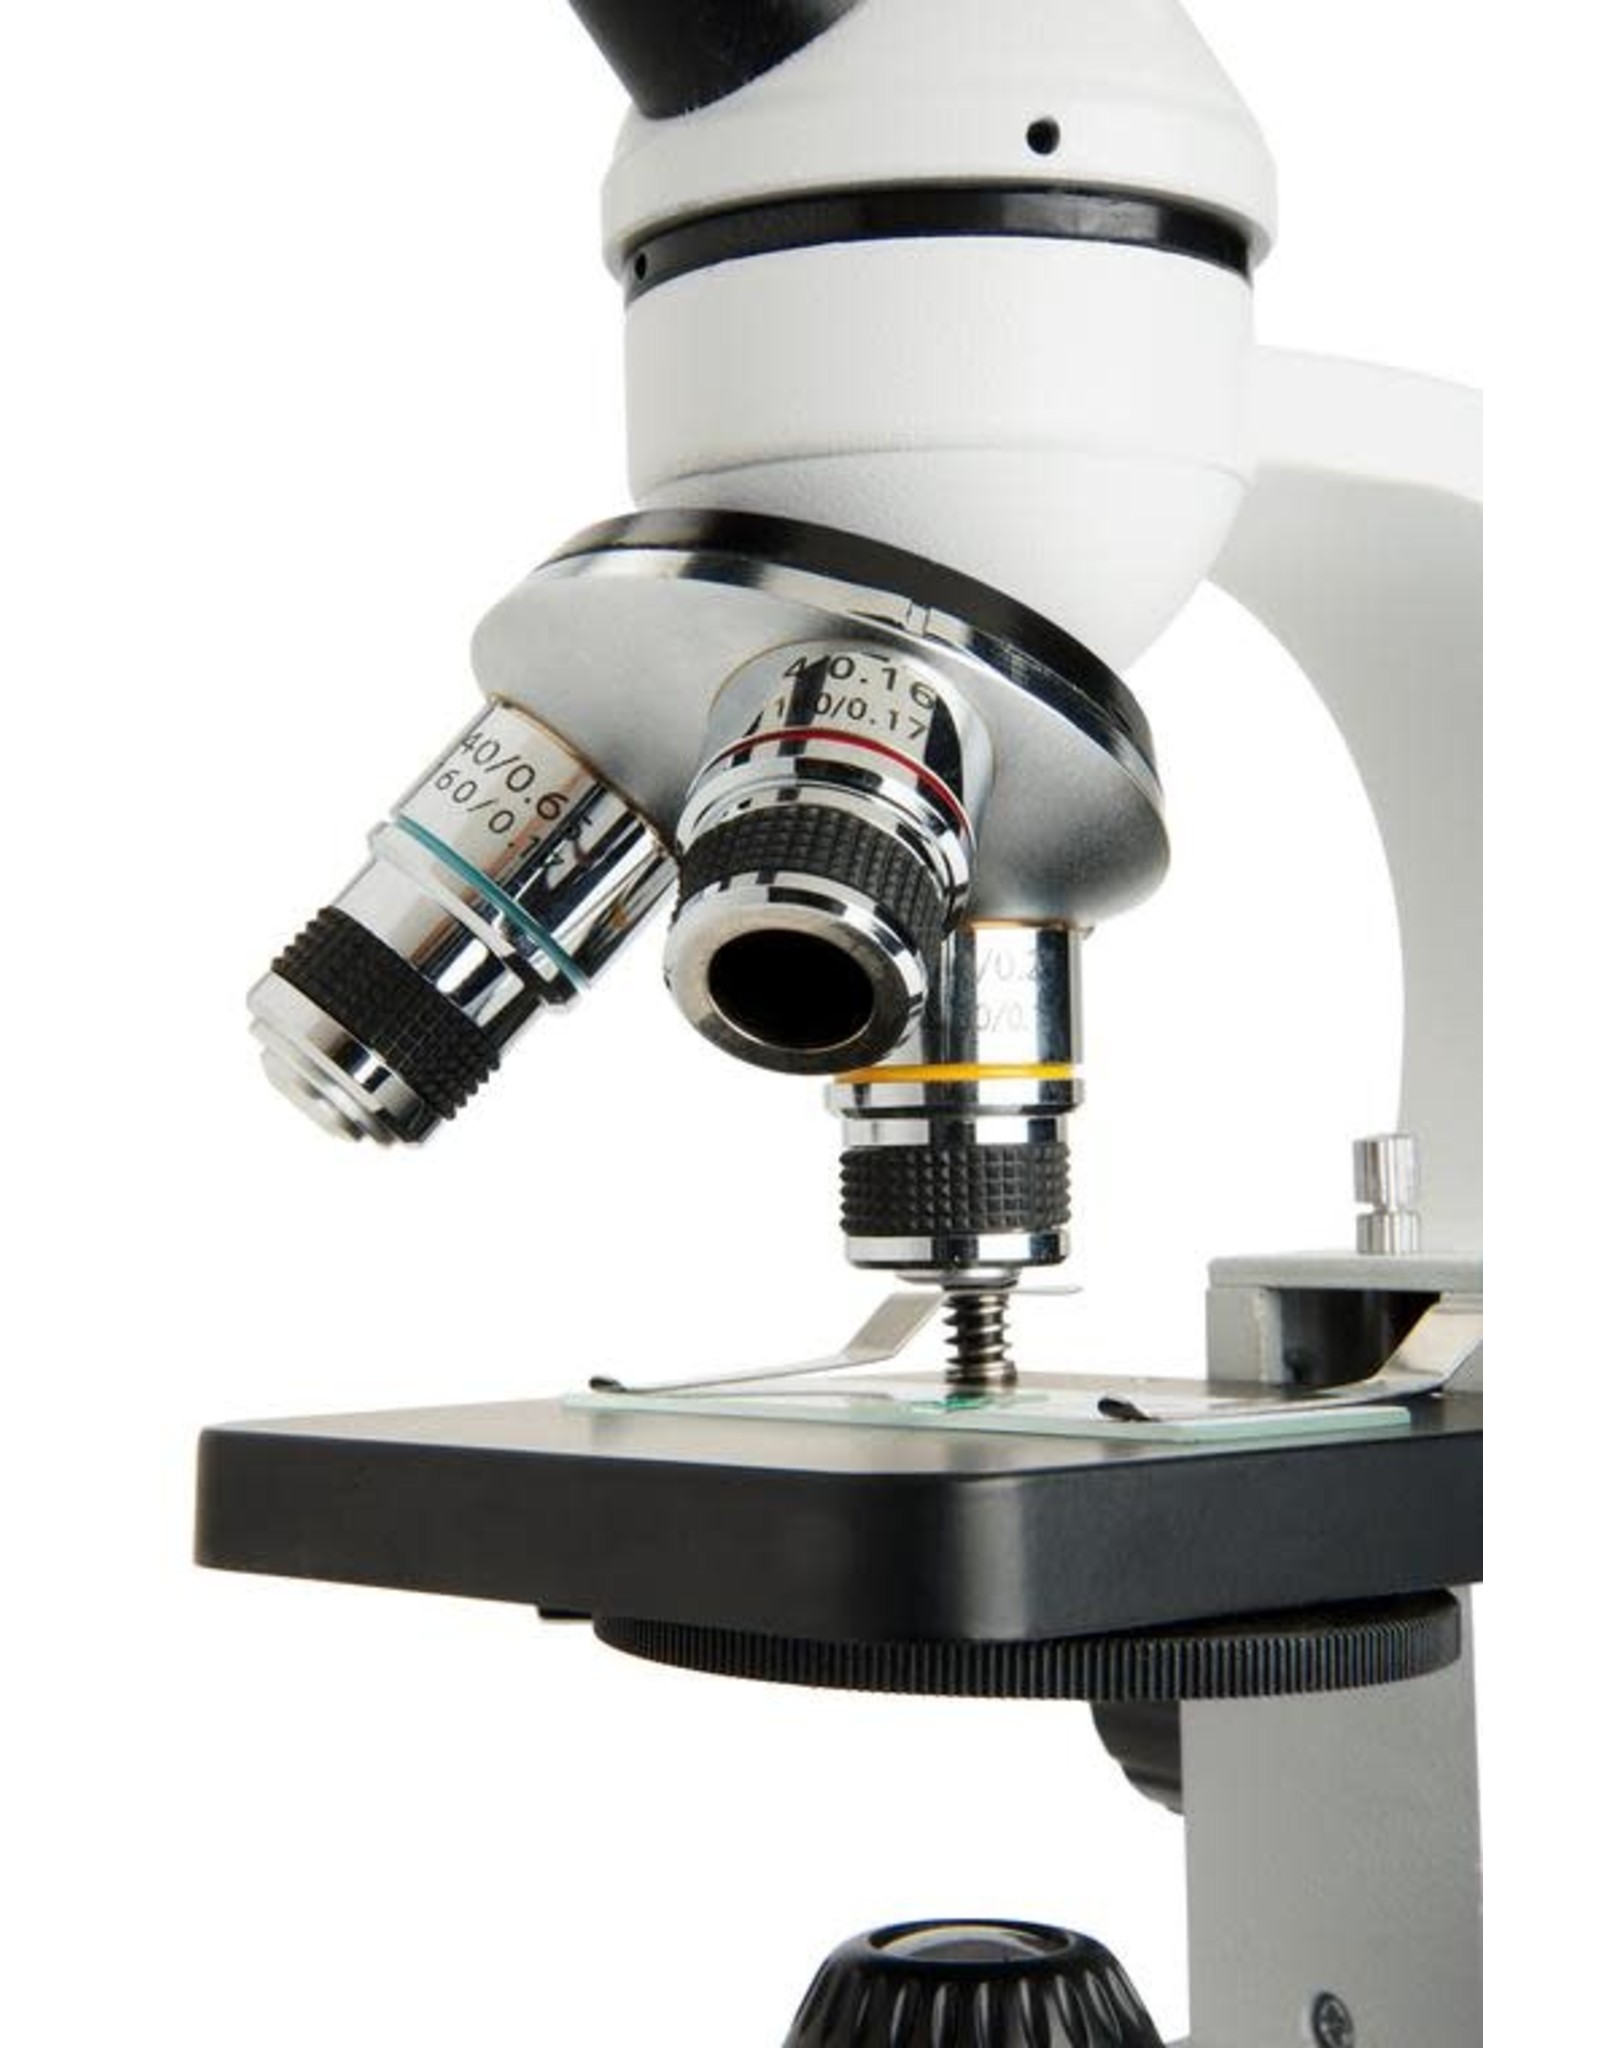 Celestron Celestron Labs CM400C Compound Microscope (LIMITED QUANTITIES!)